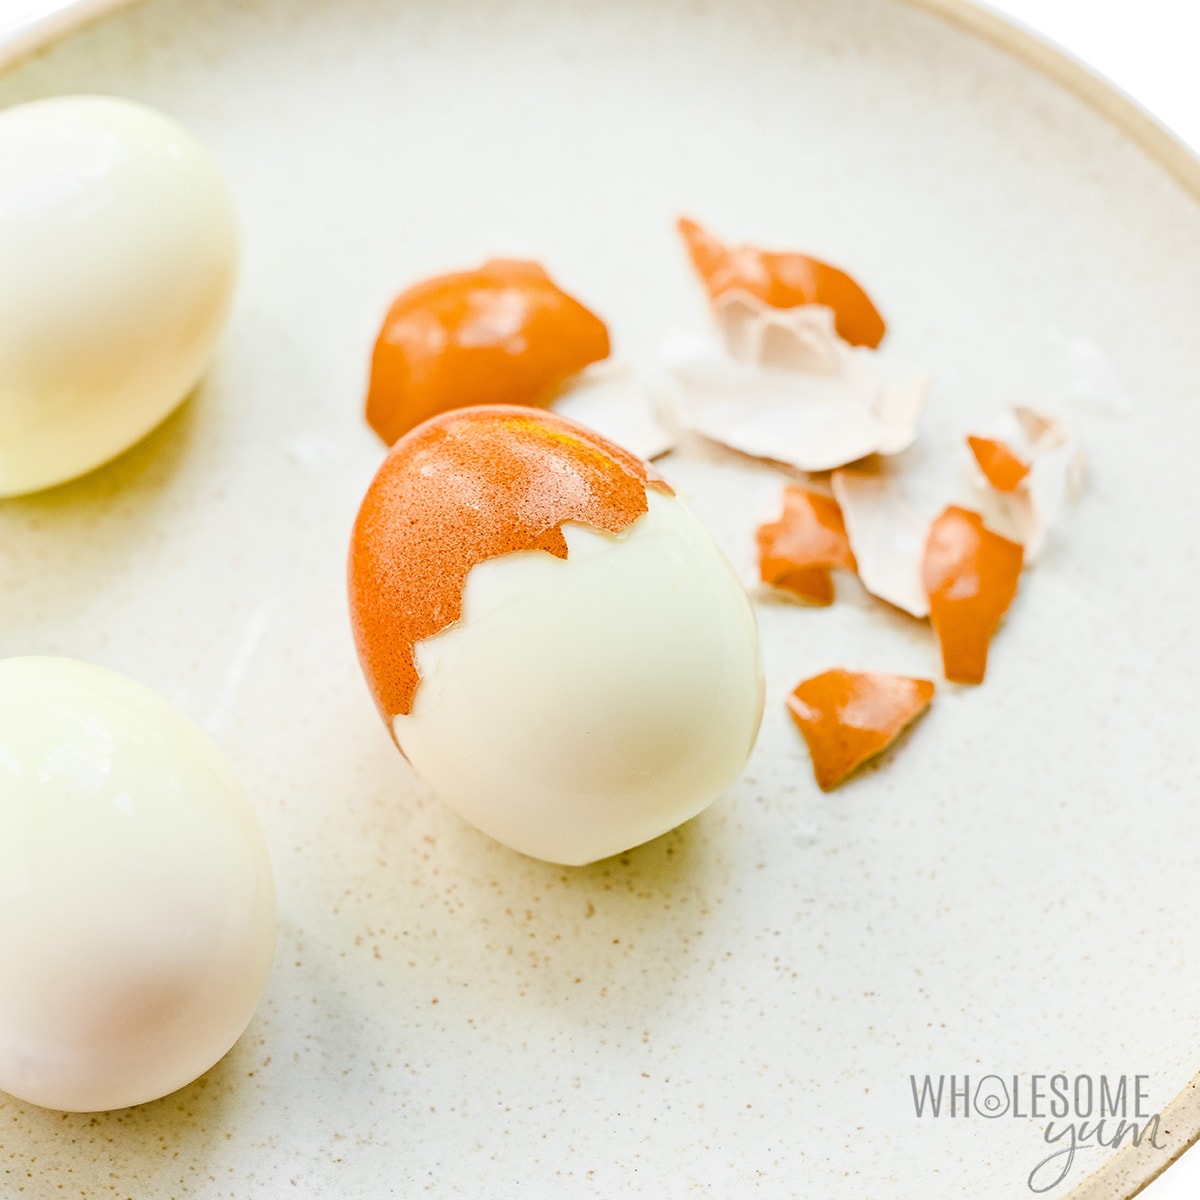 Peeling a soft boiled egg on a plate.